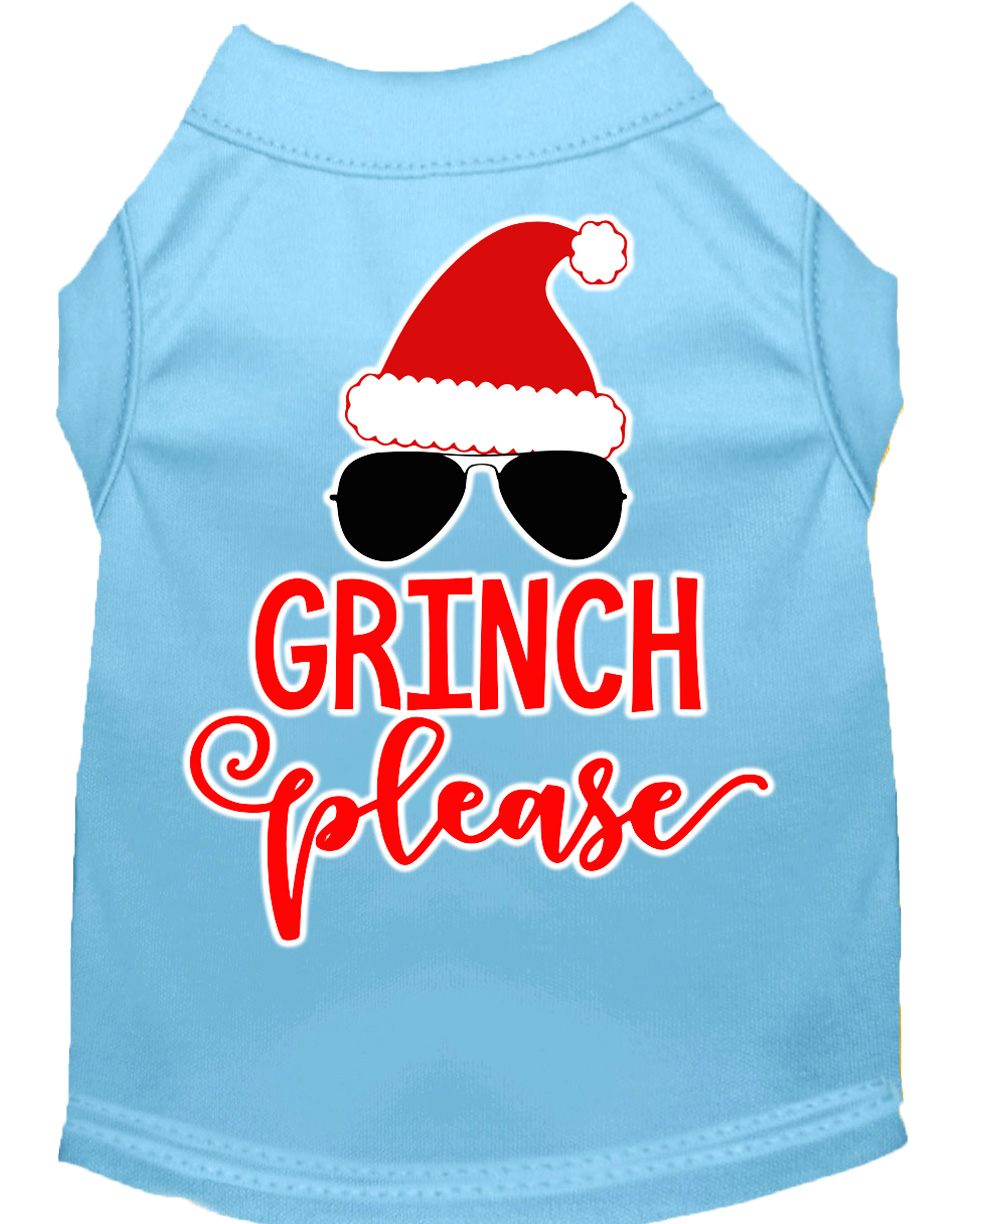 Grinch Please Screen Print Dog Shirt Baby Blue Lg